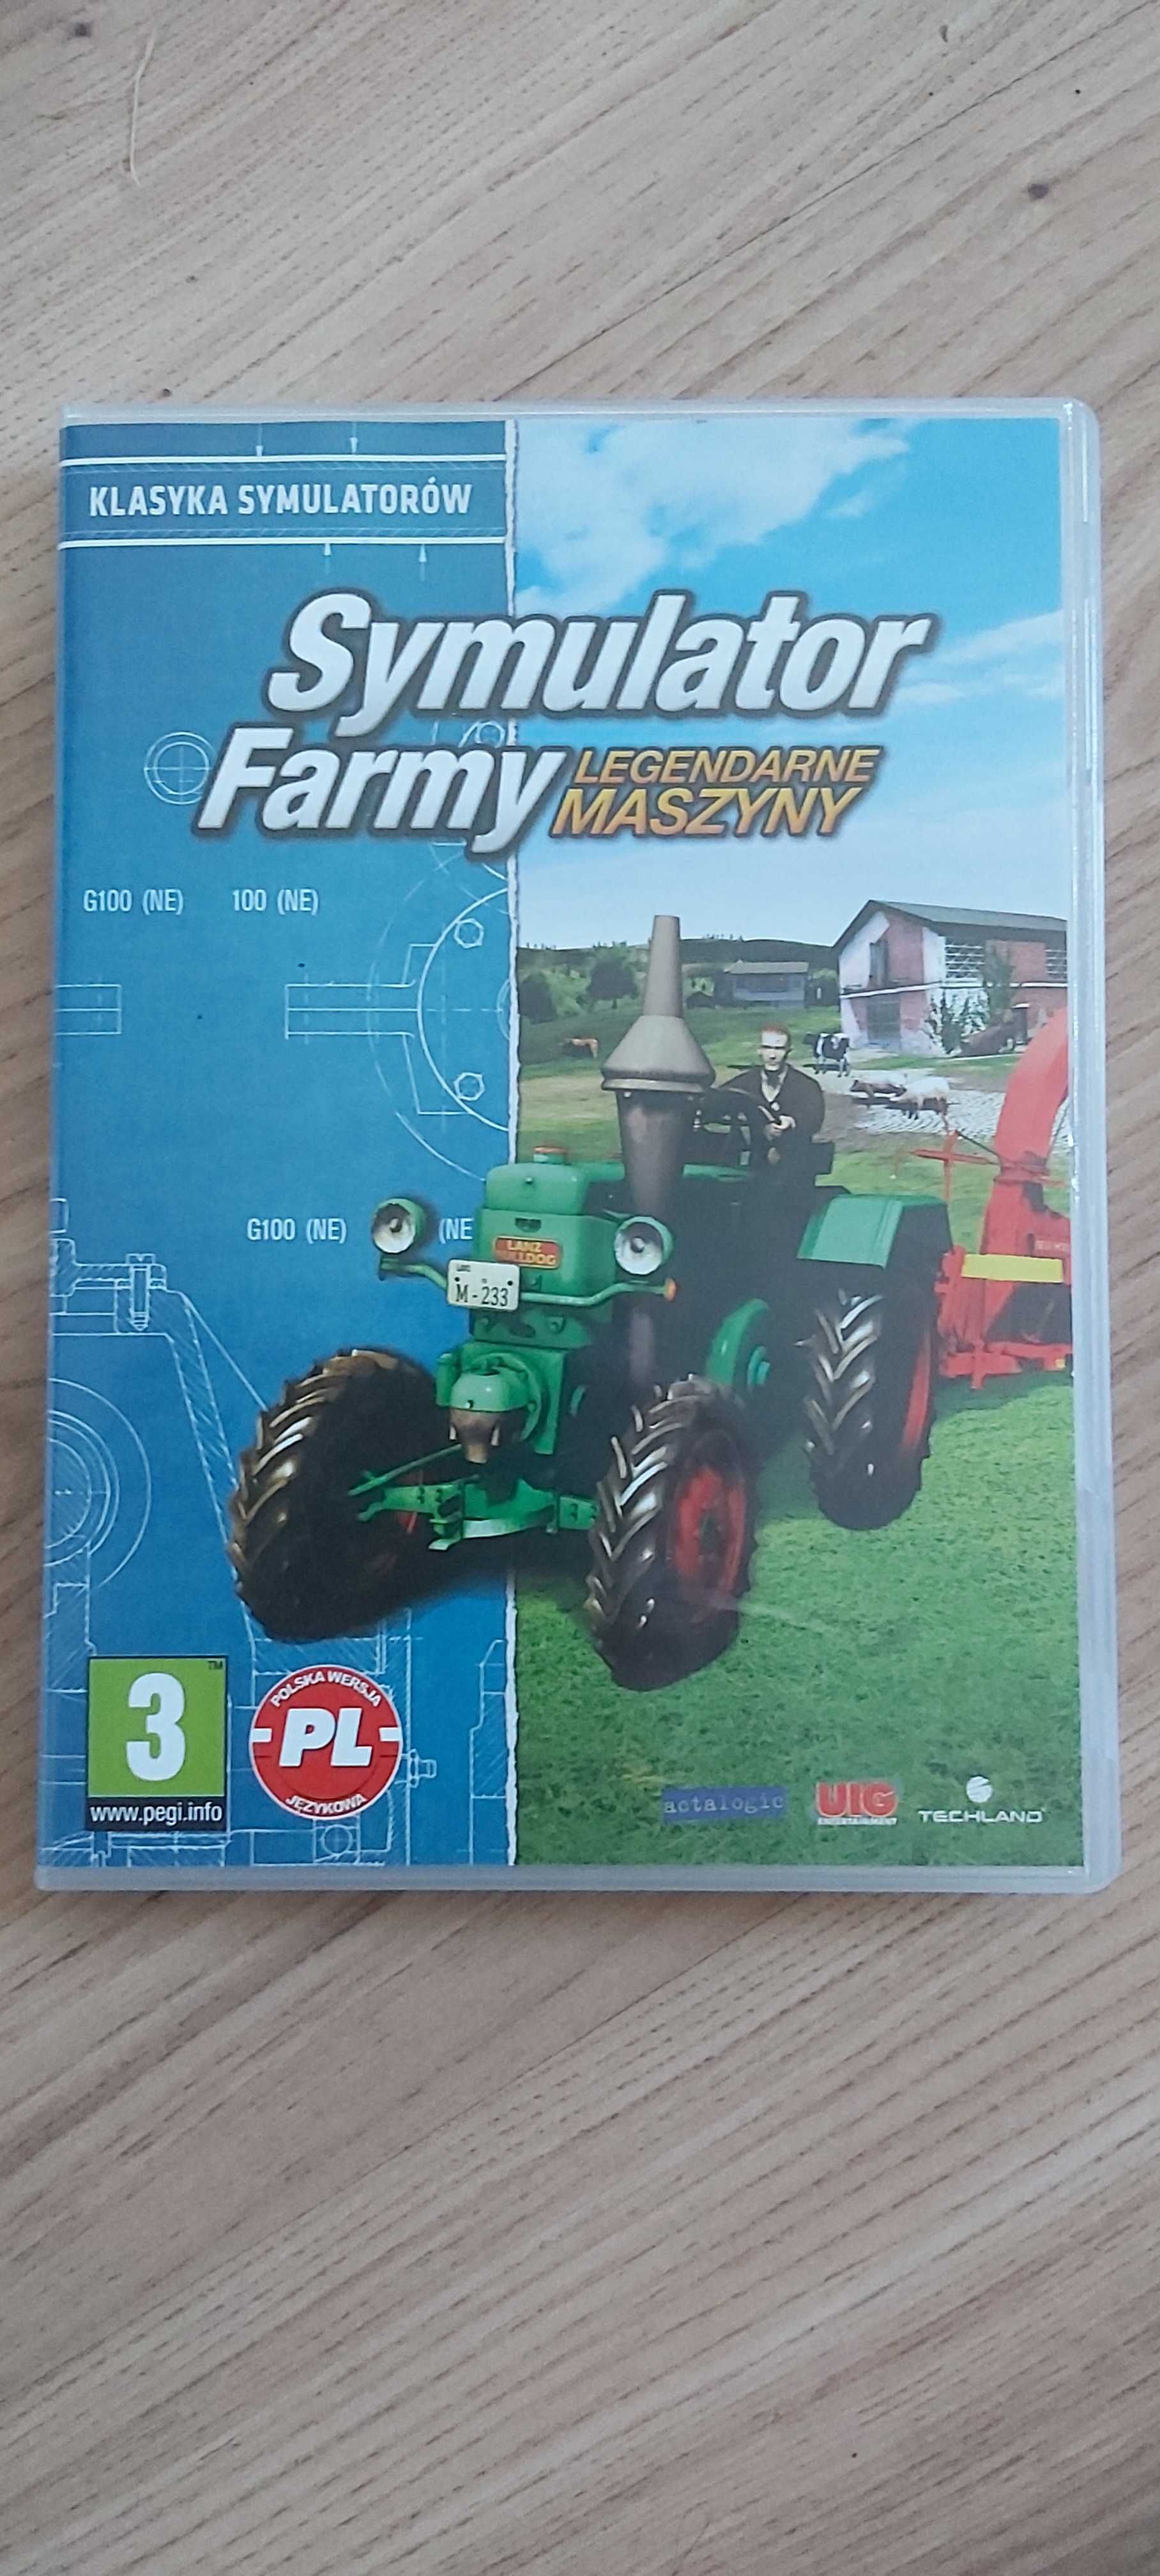 Gra "Symulator farmy legendarne maszyny" na PC